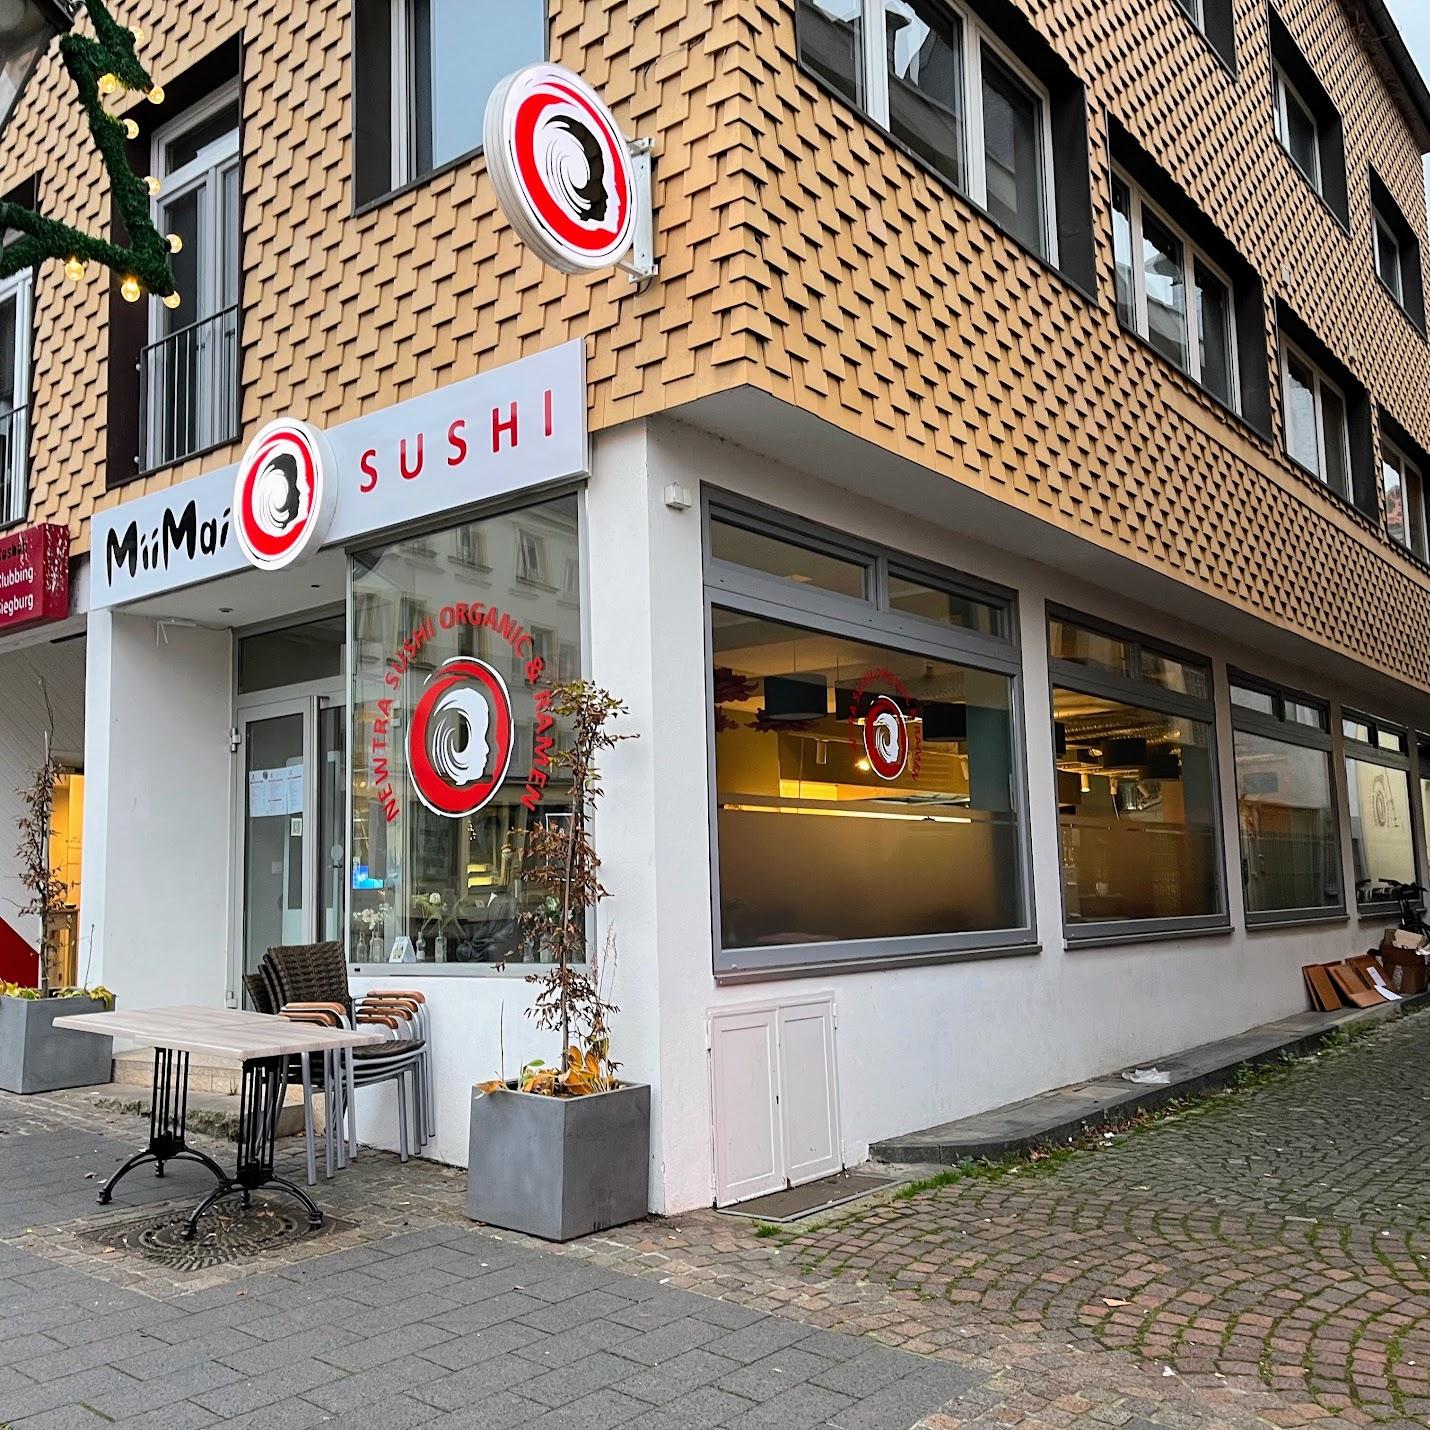 Restaurant "Mii Mai Sushi" in Siegburg